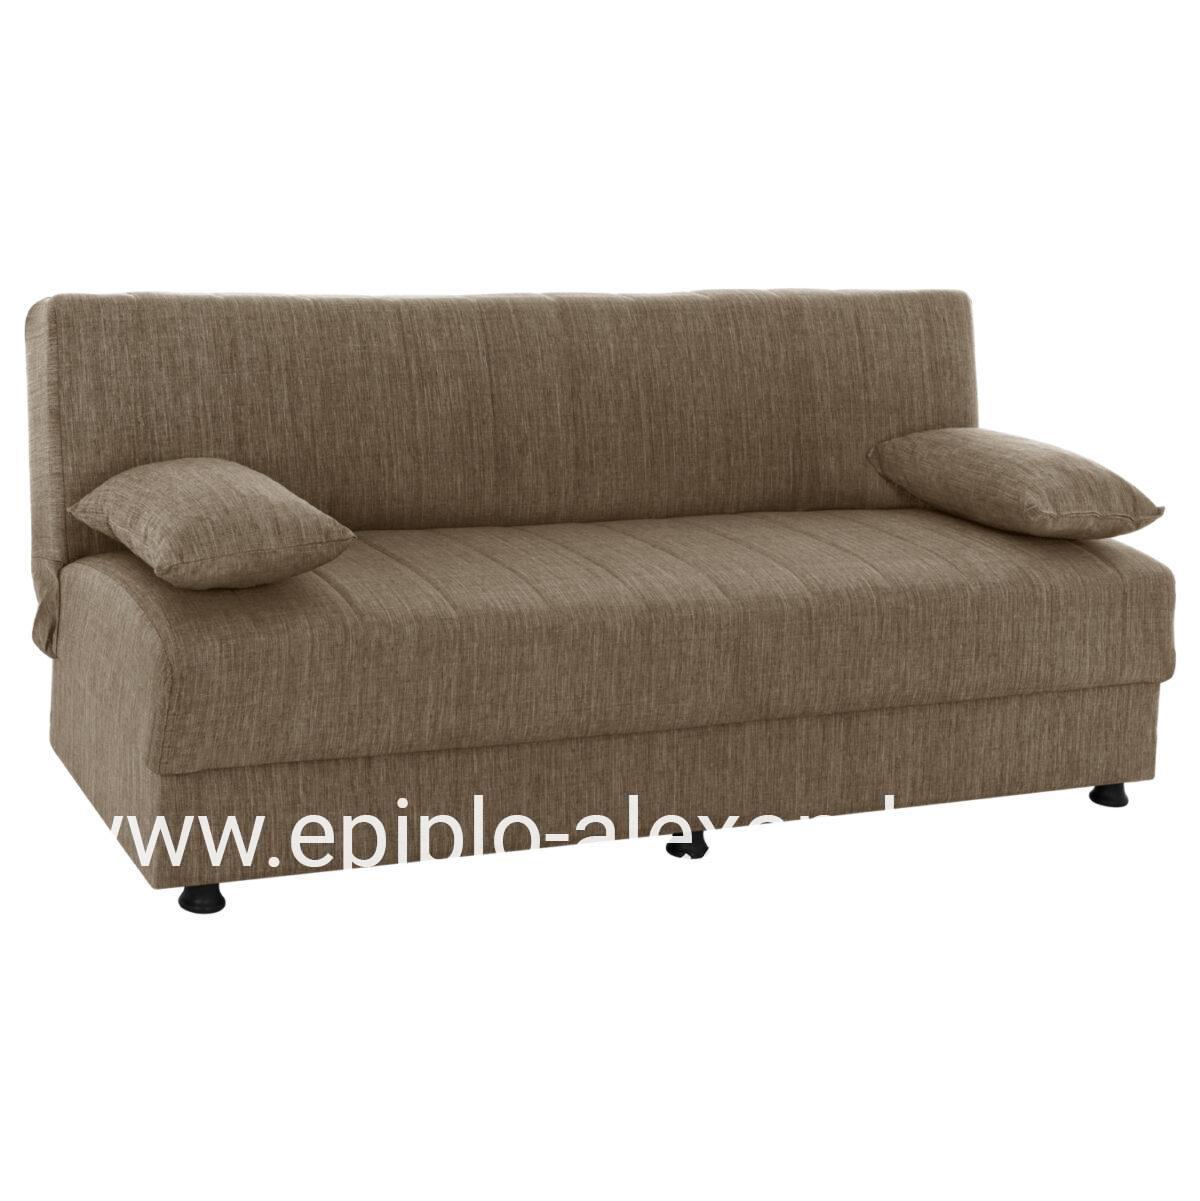 Hm3239.02 ANDRI three-seater sofa-bed